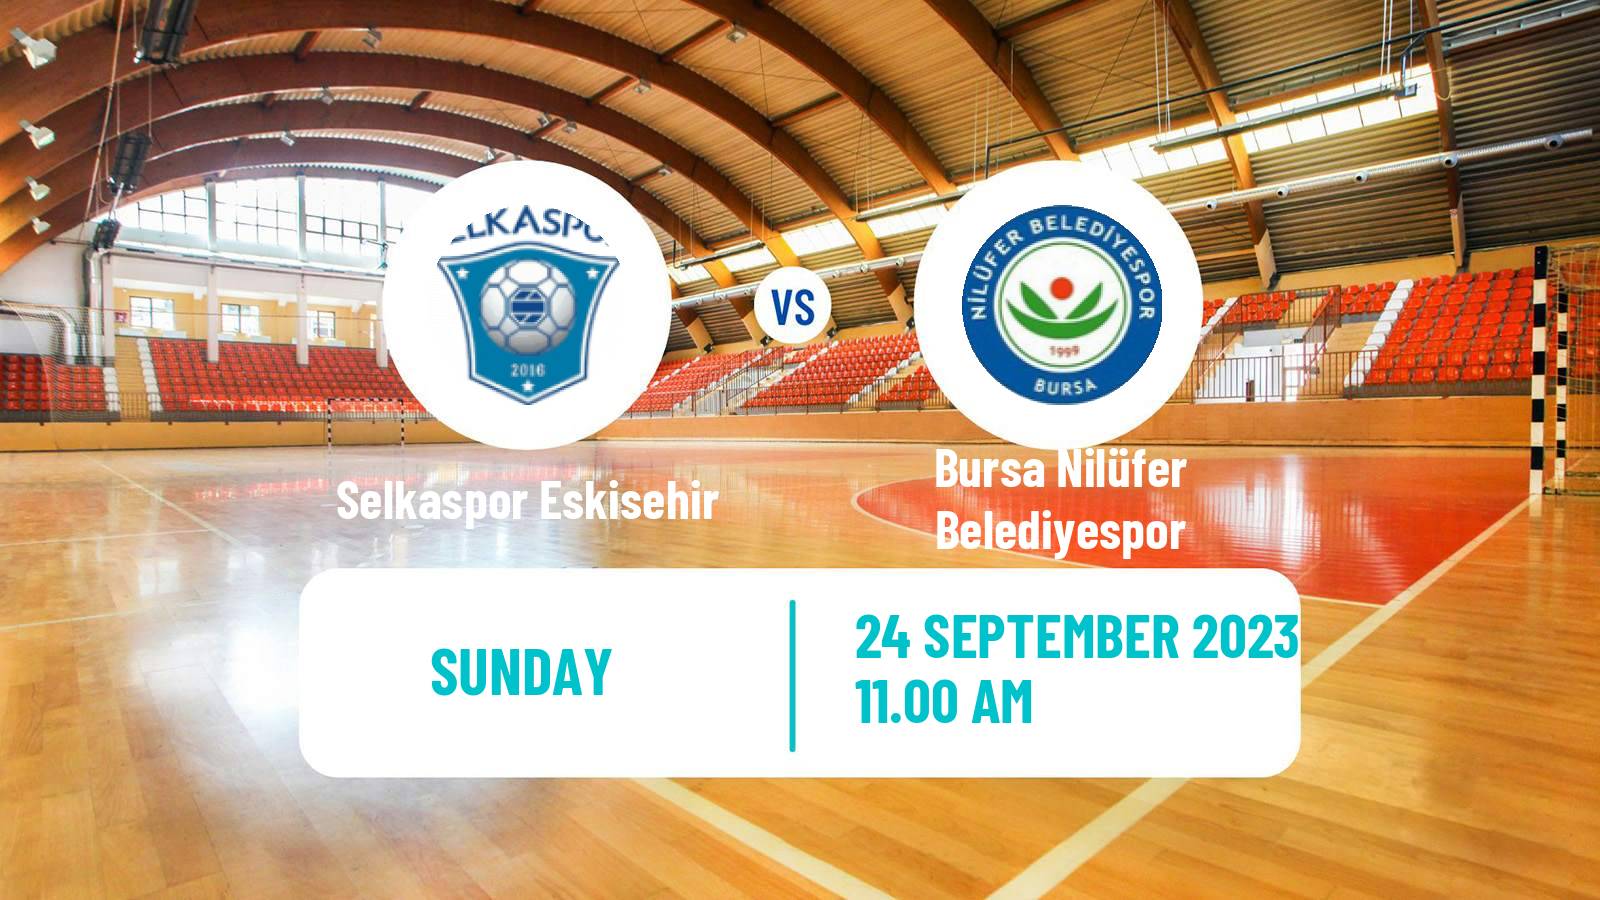 Handball Turkish Superlig Handball Selkaspor Eskisehir - Bursa Nilüfer Belediyespor